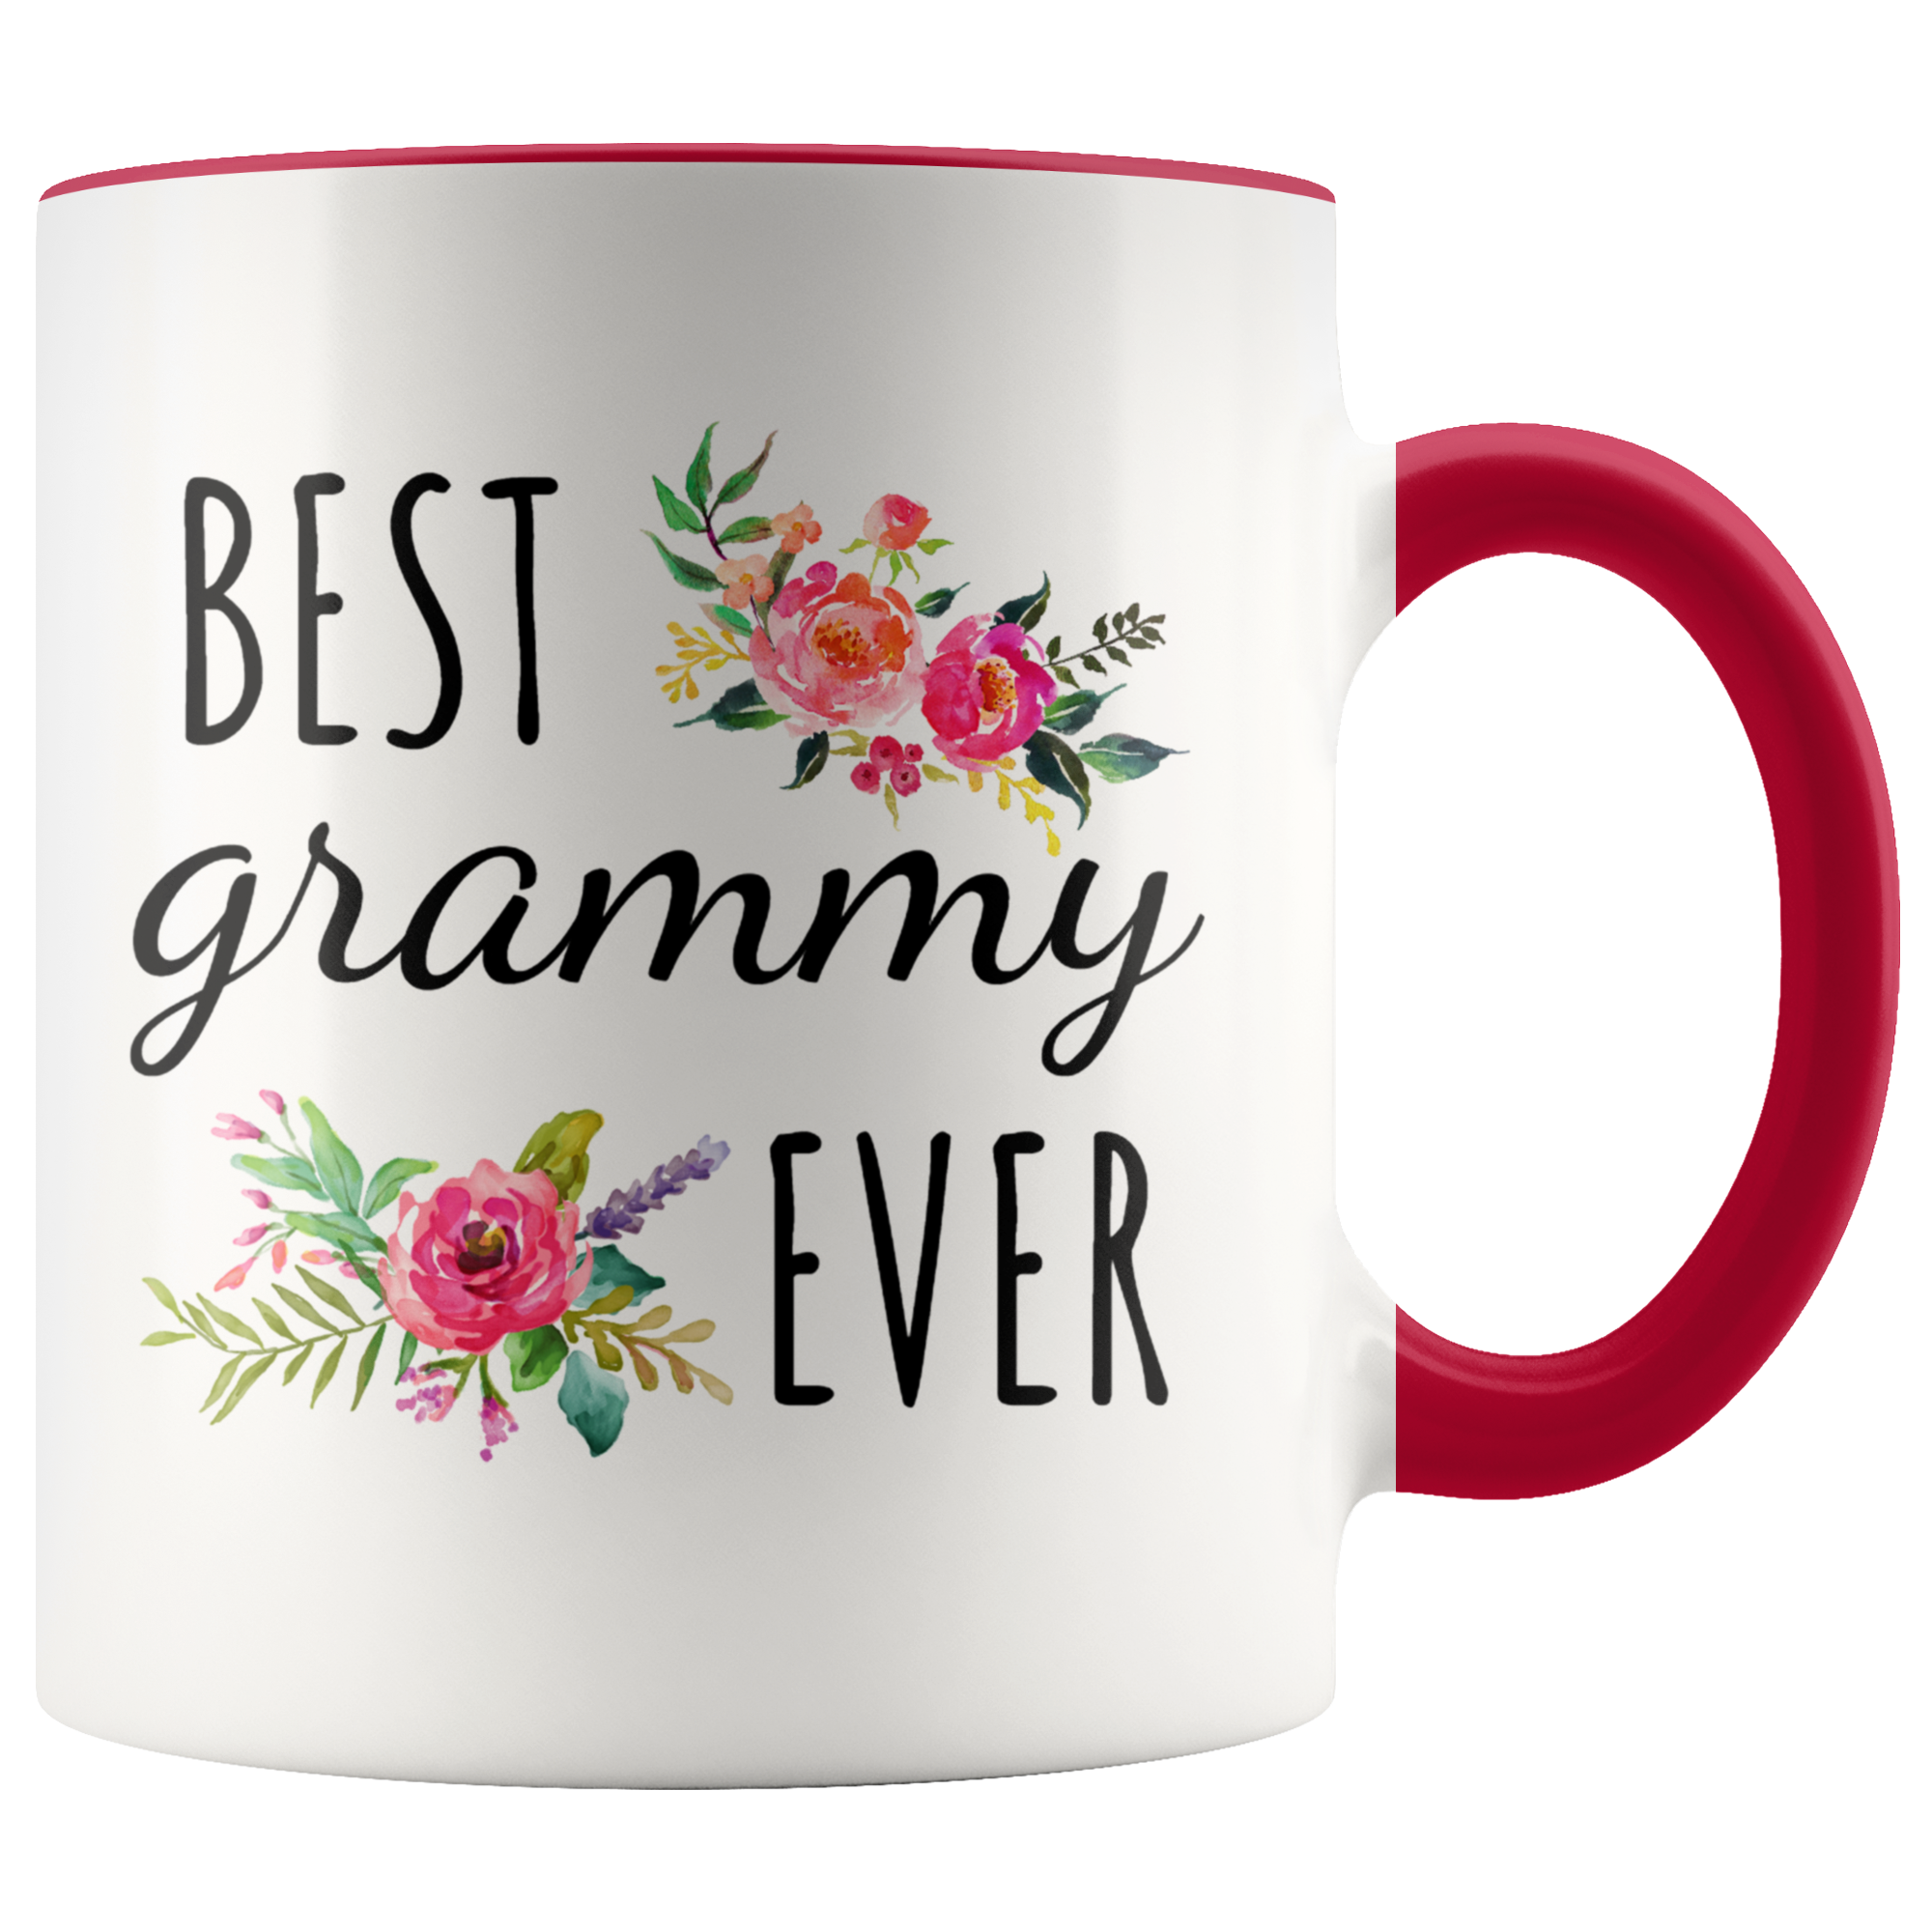 Best Grammy Mug